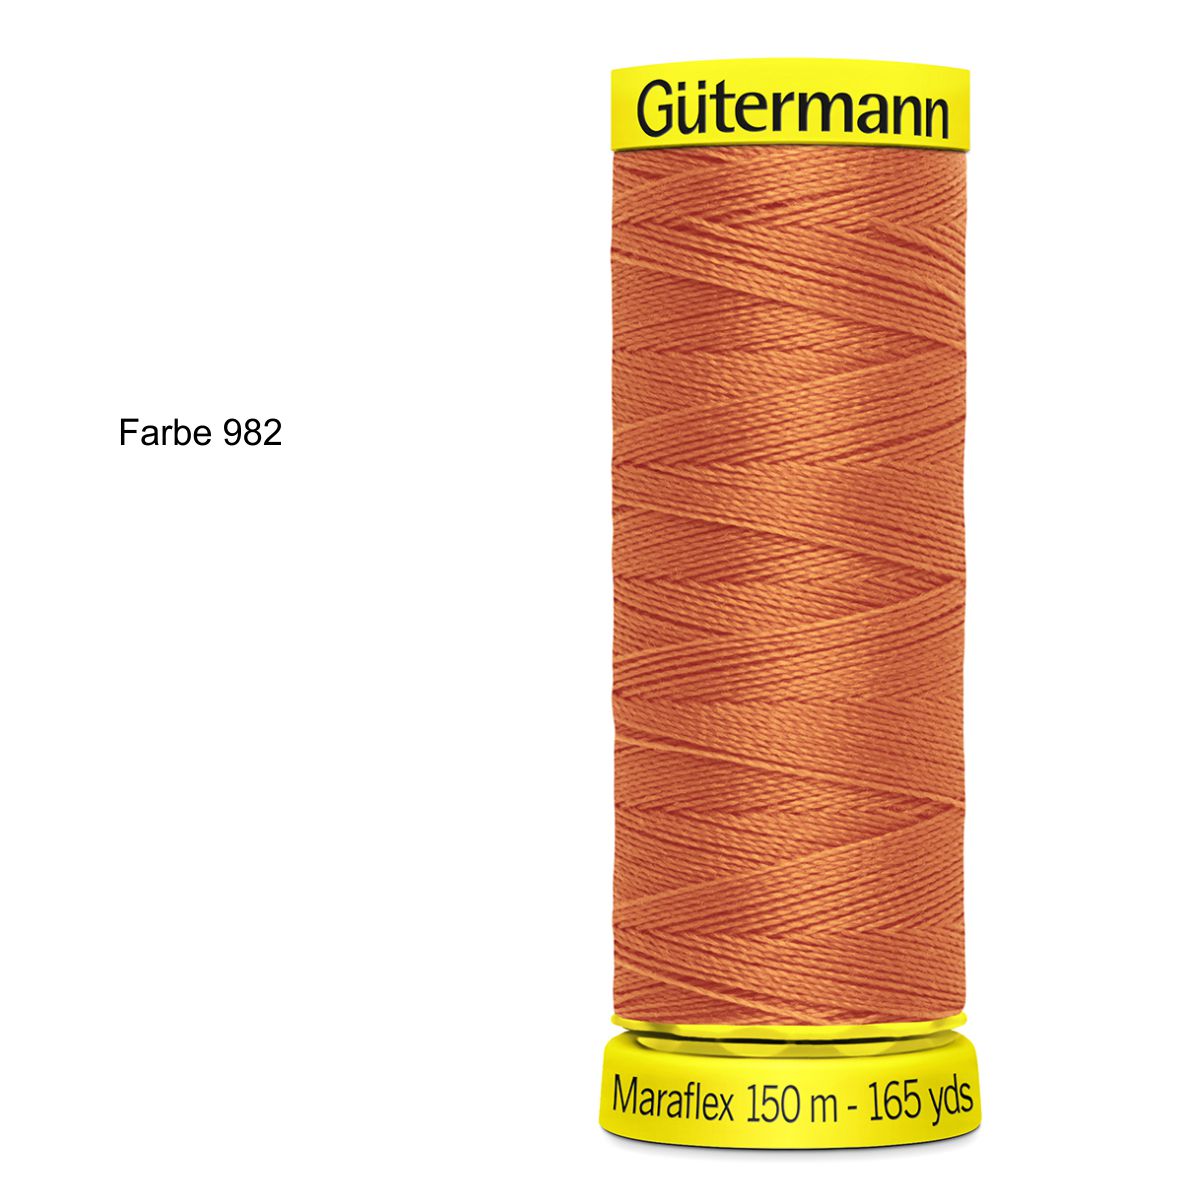 Gütermann Maraflex Elastic- Nähgarn 150m Farbe 982